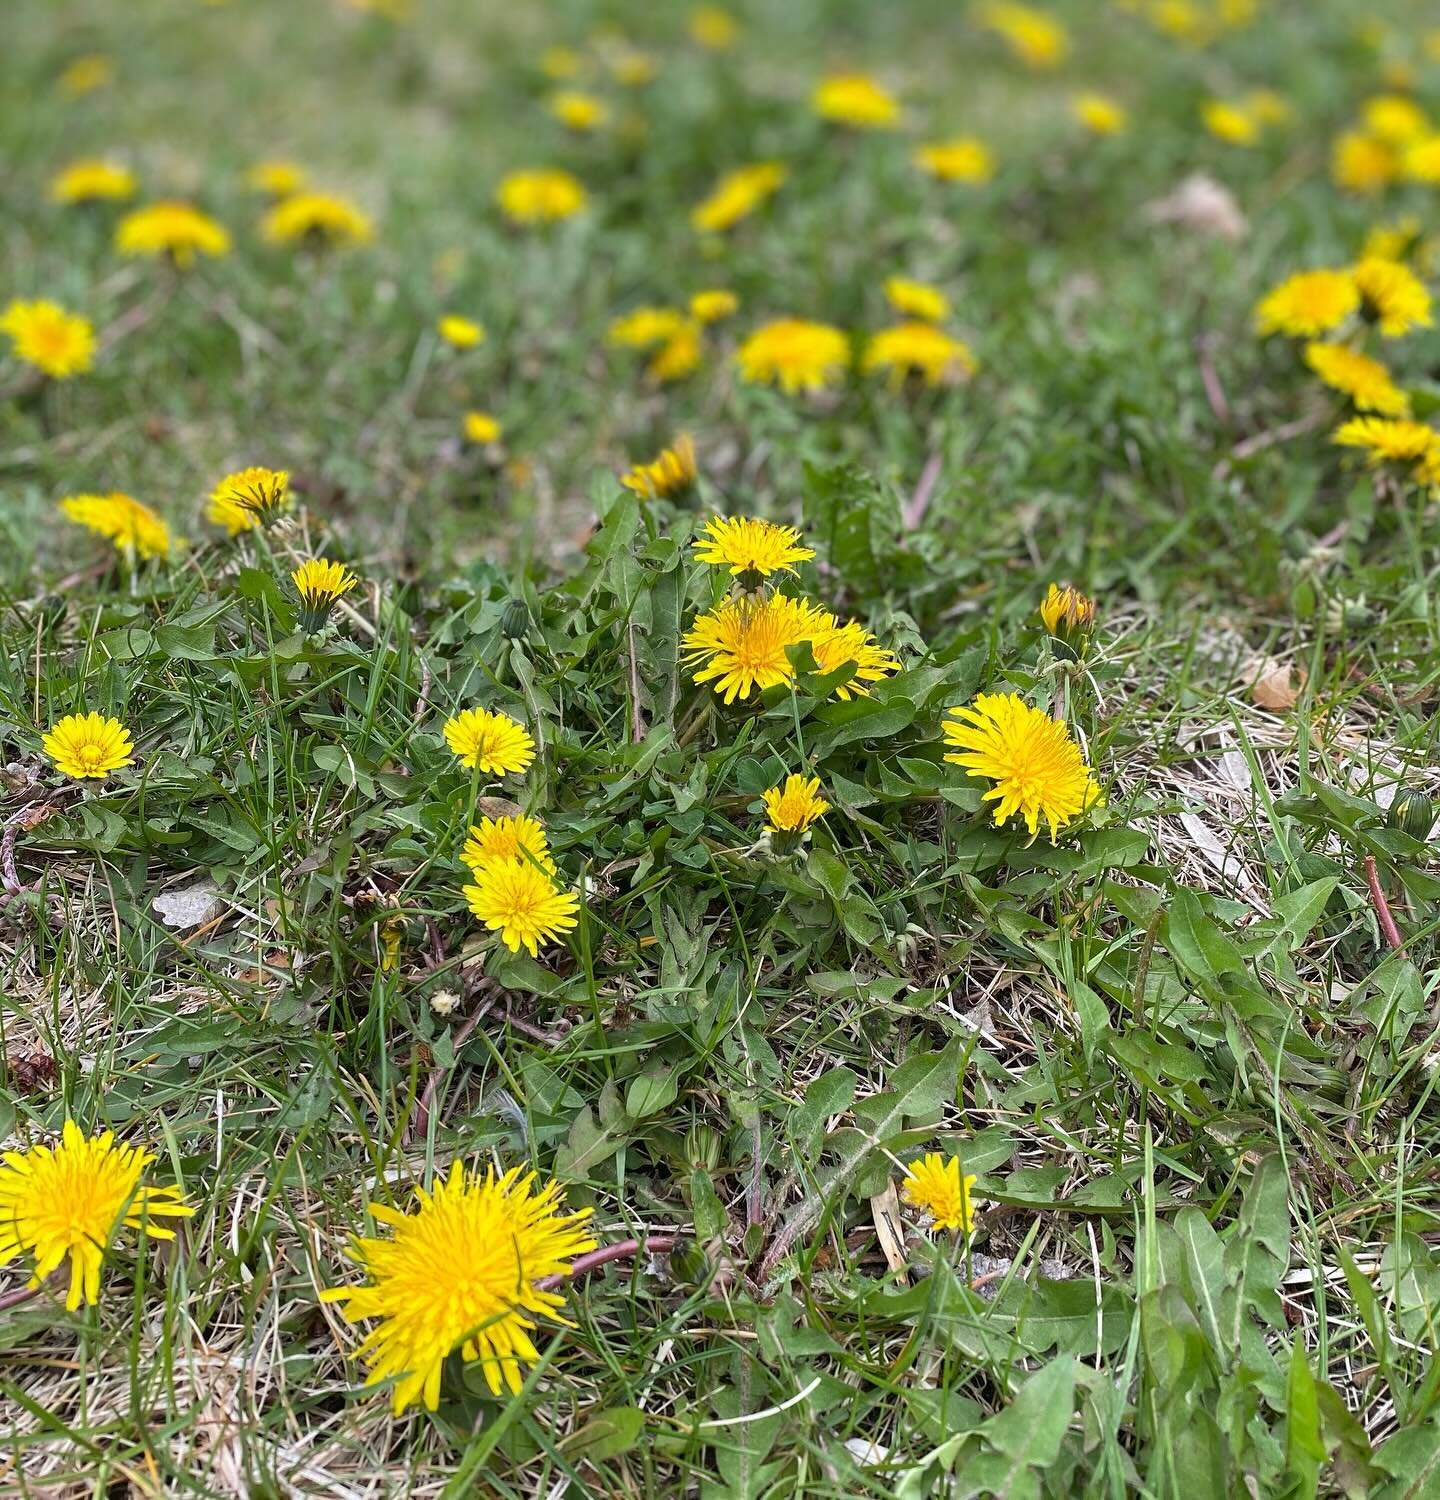 ~Mellow Monday~

#mellowmonday #dandelions #flowers #spring #yellow #ediblenature #fortbentonlibrary #fortbentonmontana #fortbenton #chouteaucounty #montana